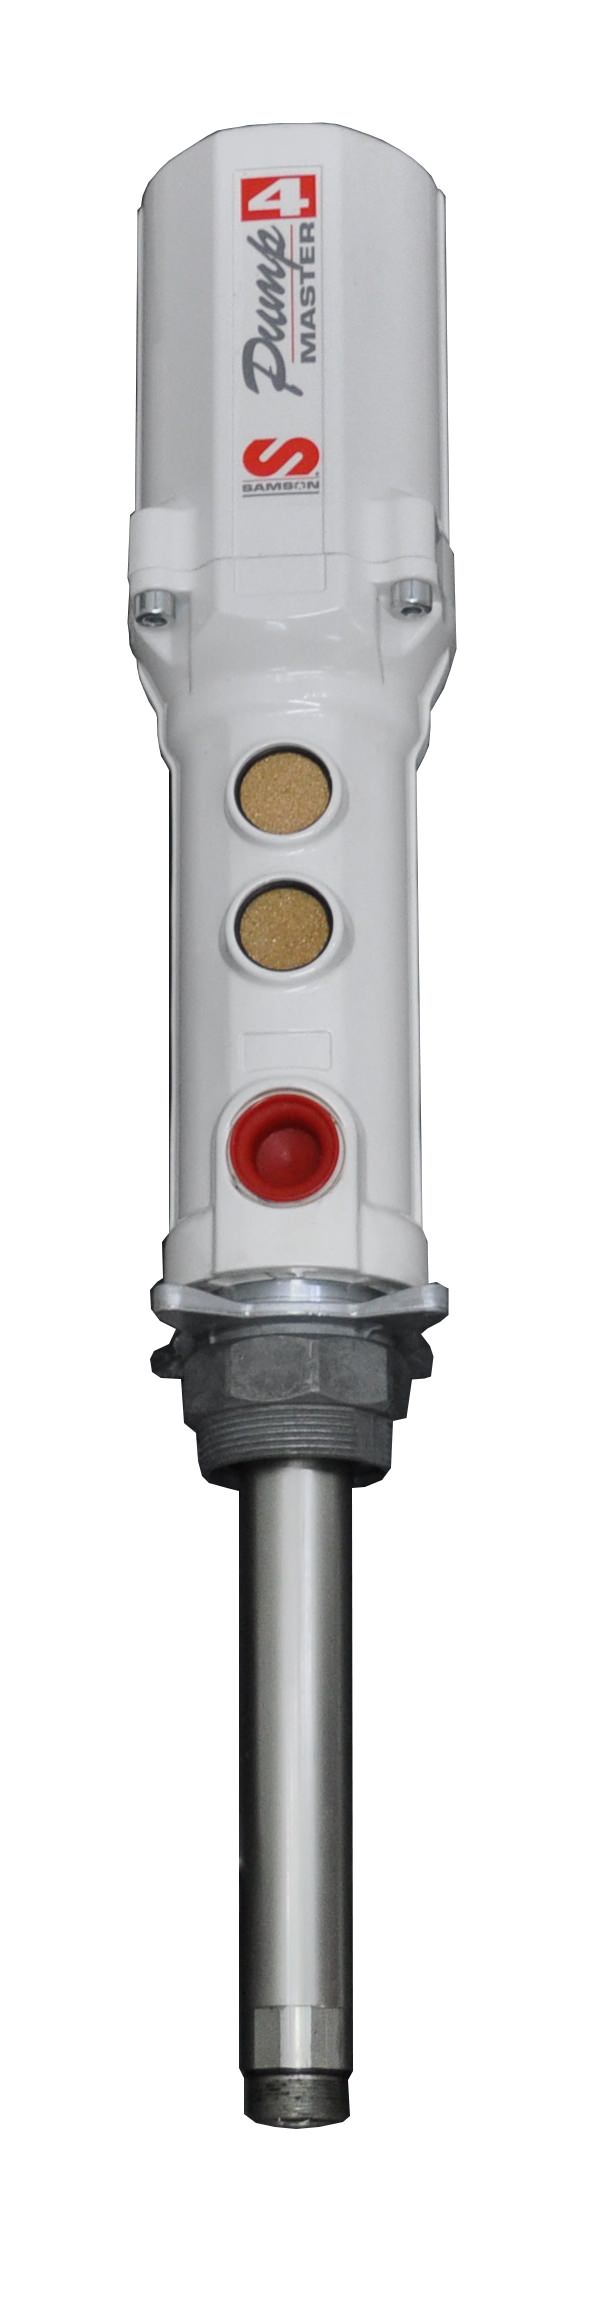 PumpMaster 4 5:1 (55 Gal.) Air Operated Oil Pump